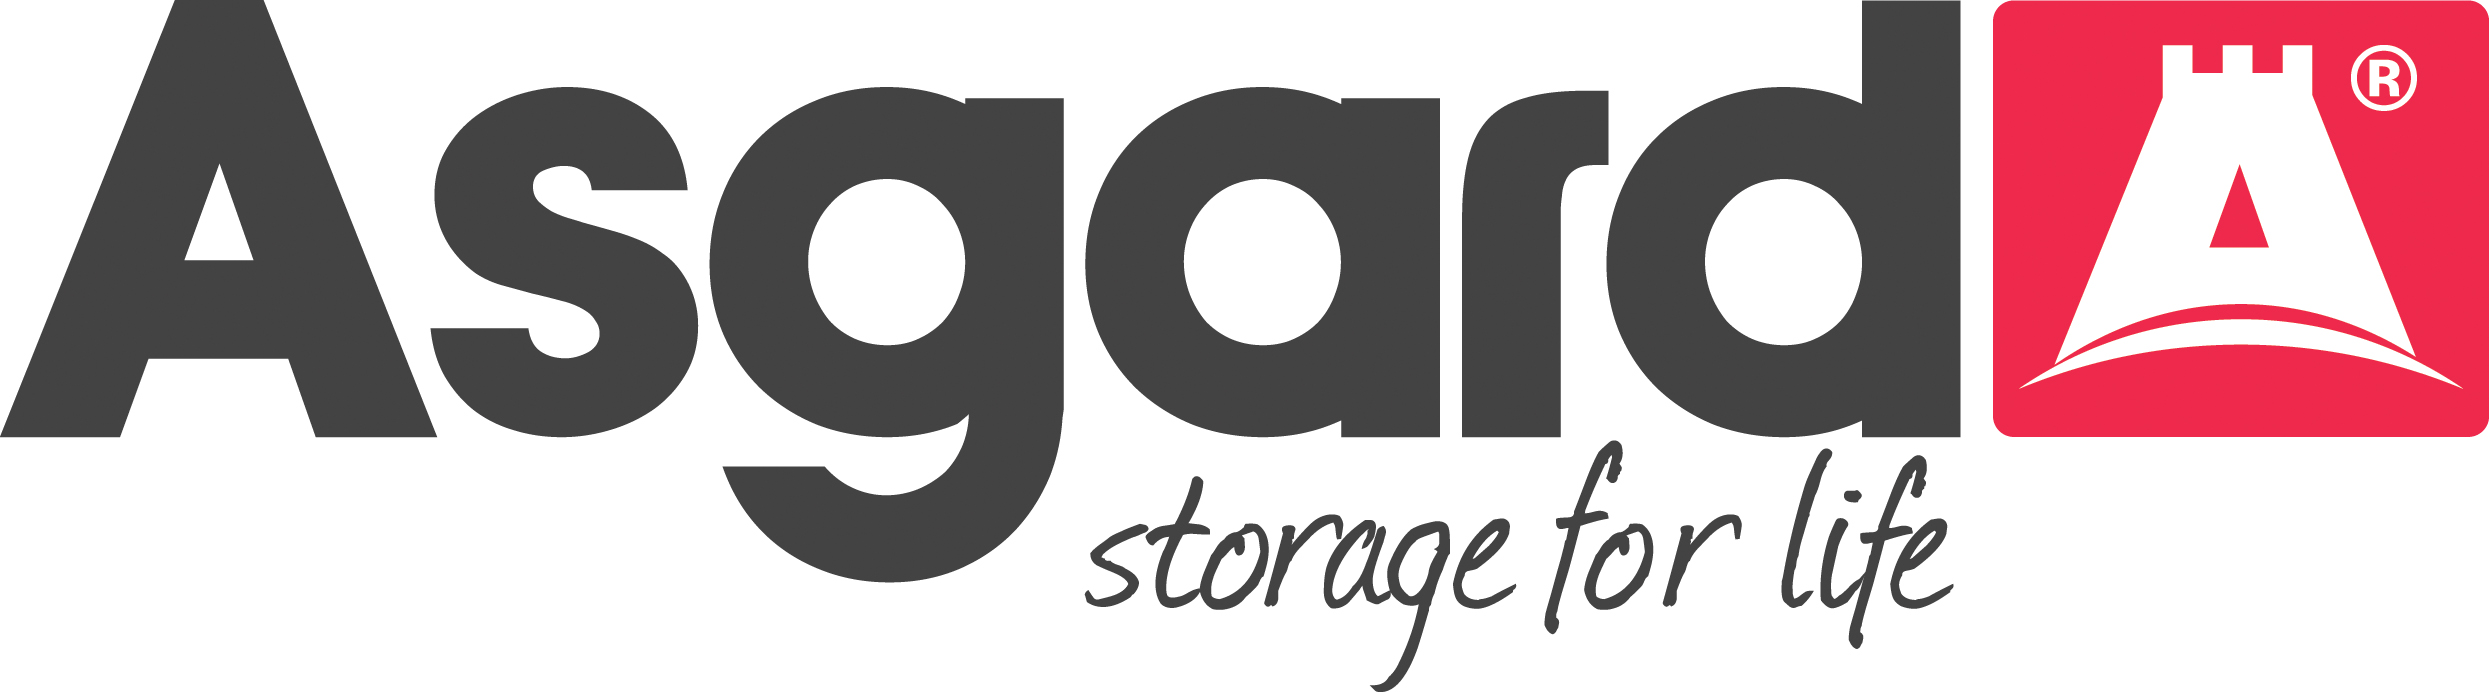 Asgard storage brand logo